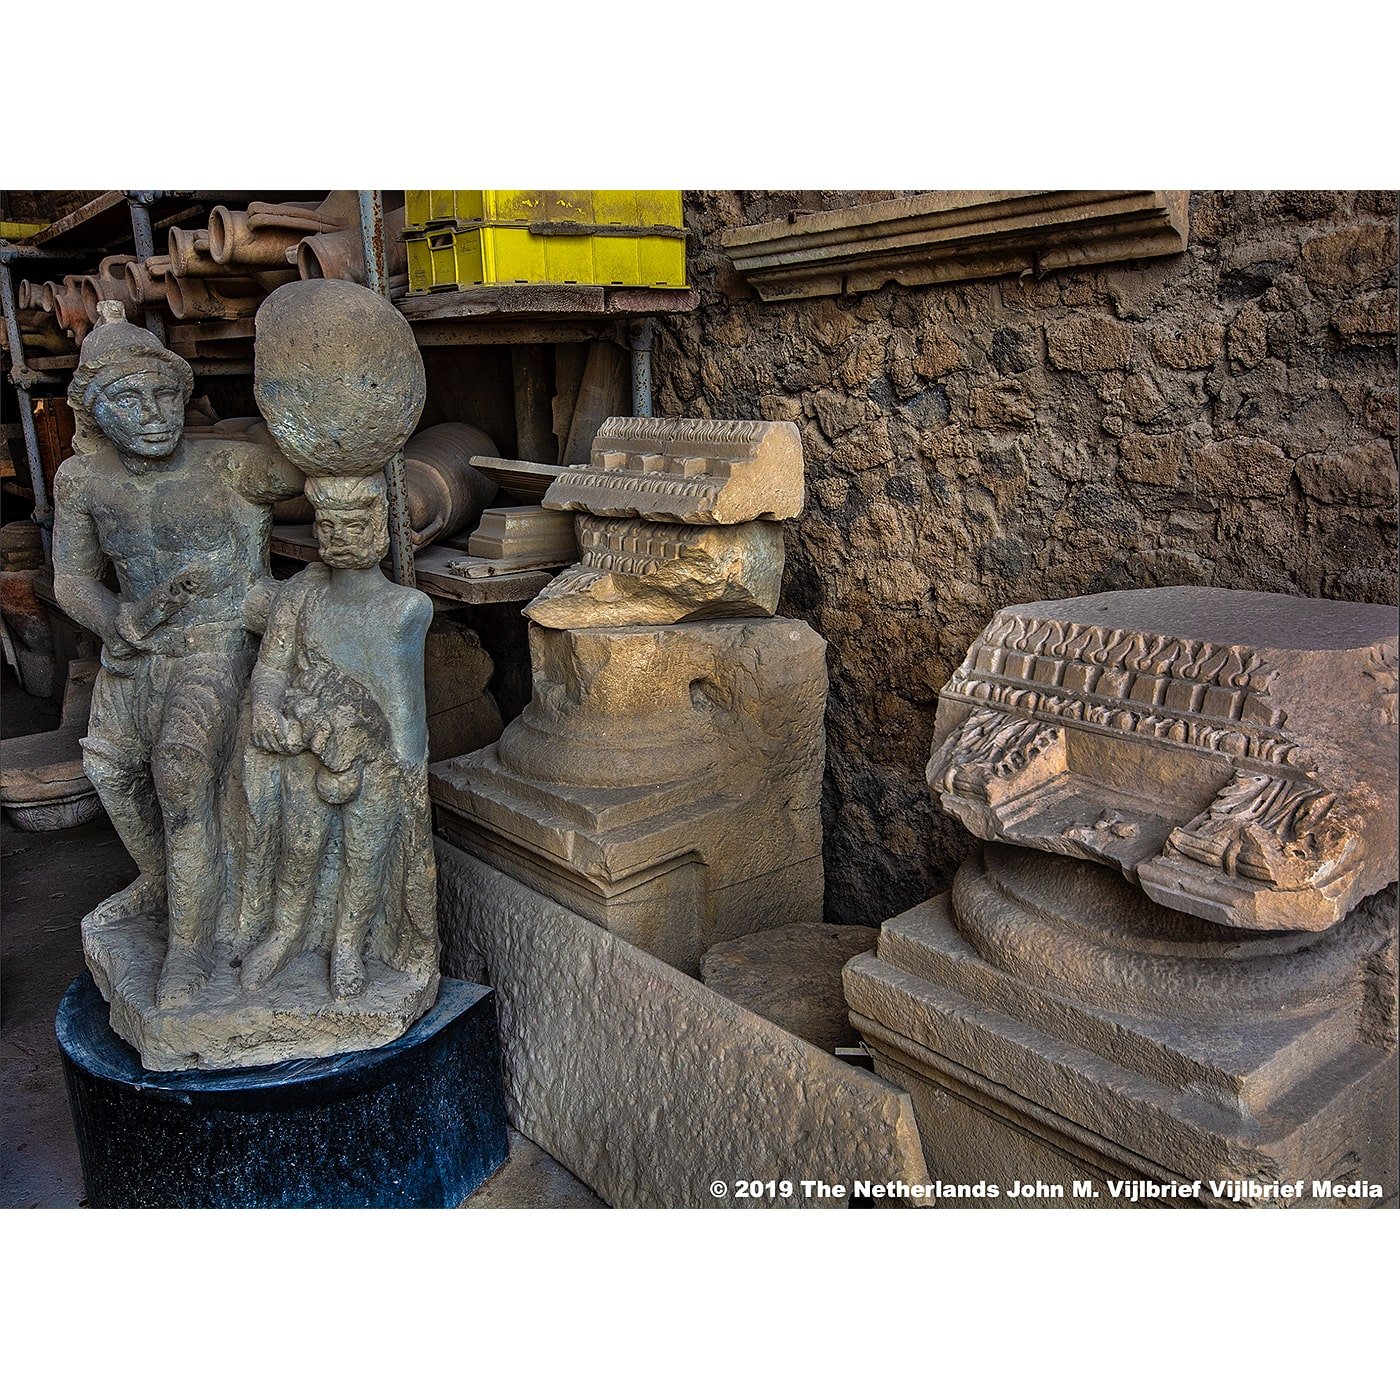 Pompei8_JohnVijlbrief-min.jpg